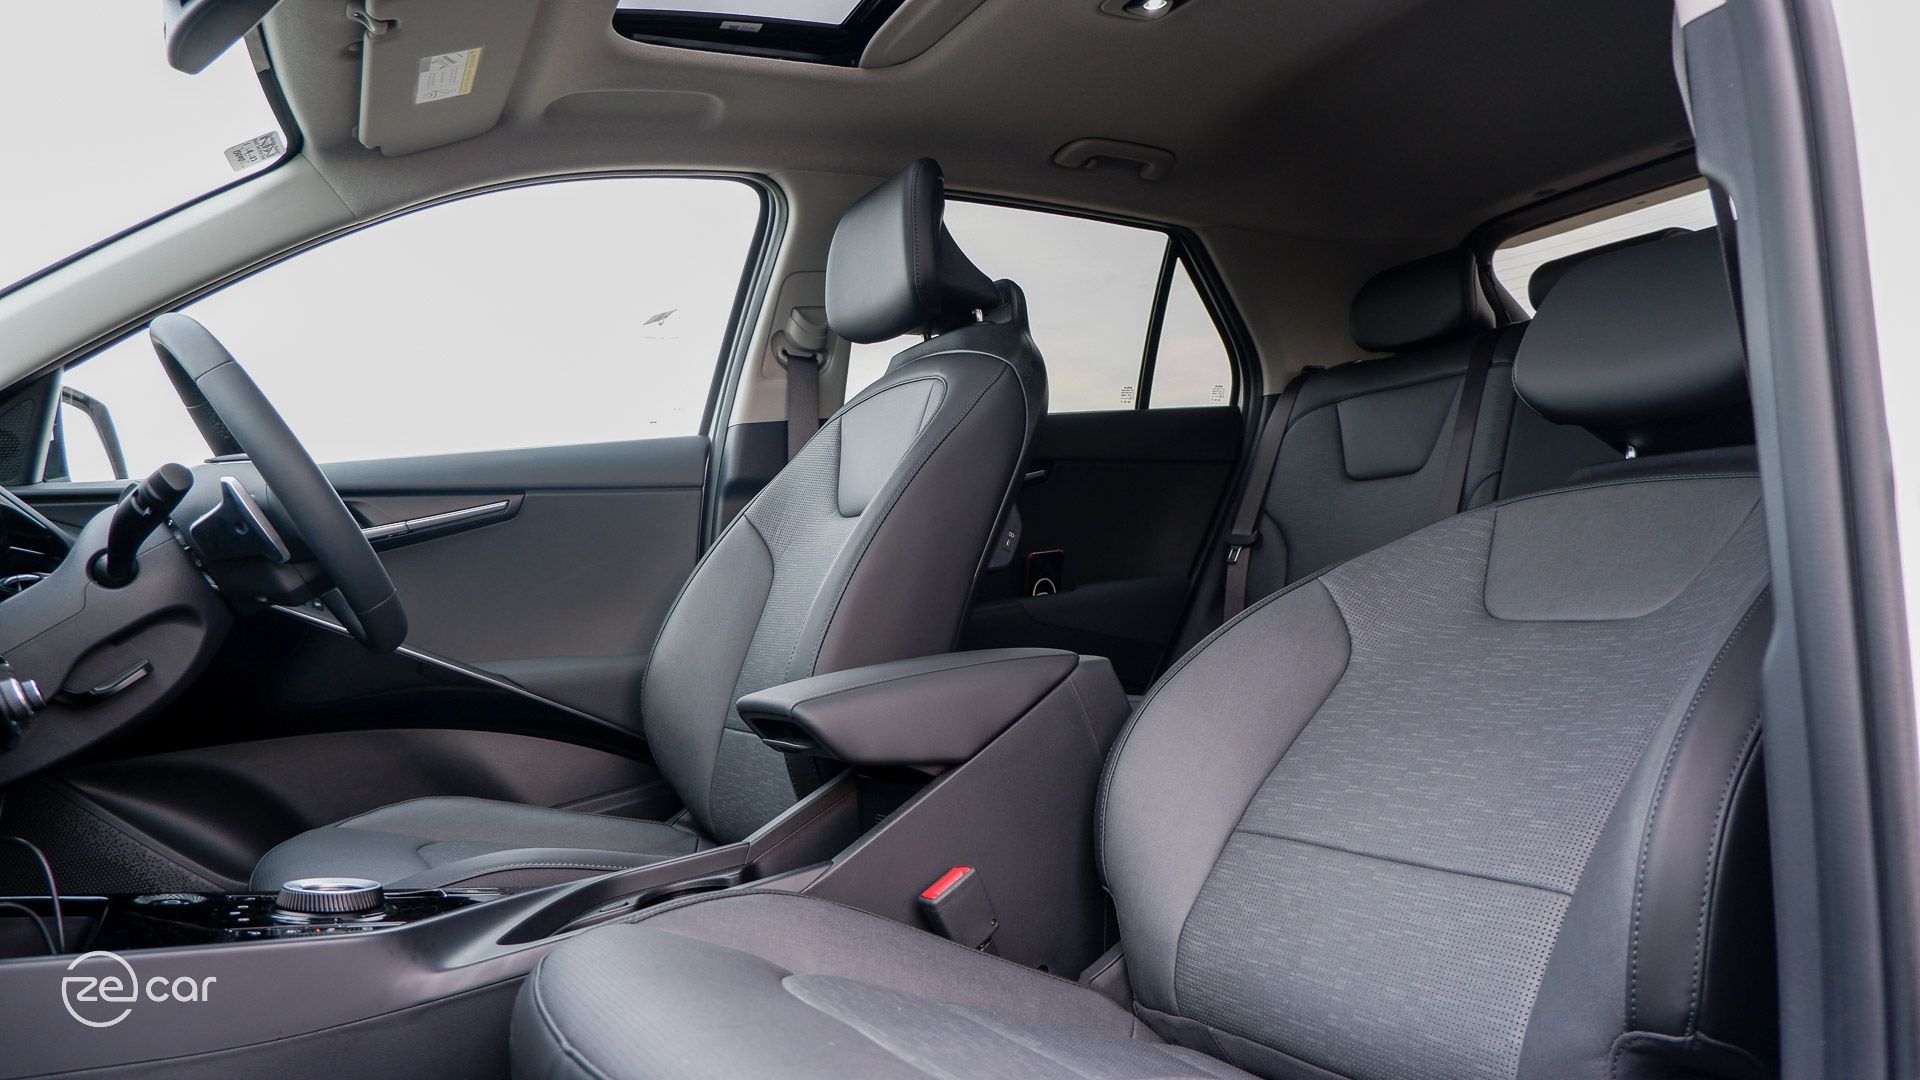 Kia Niro EV interior seats and cup holders